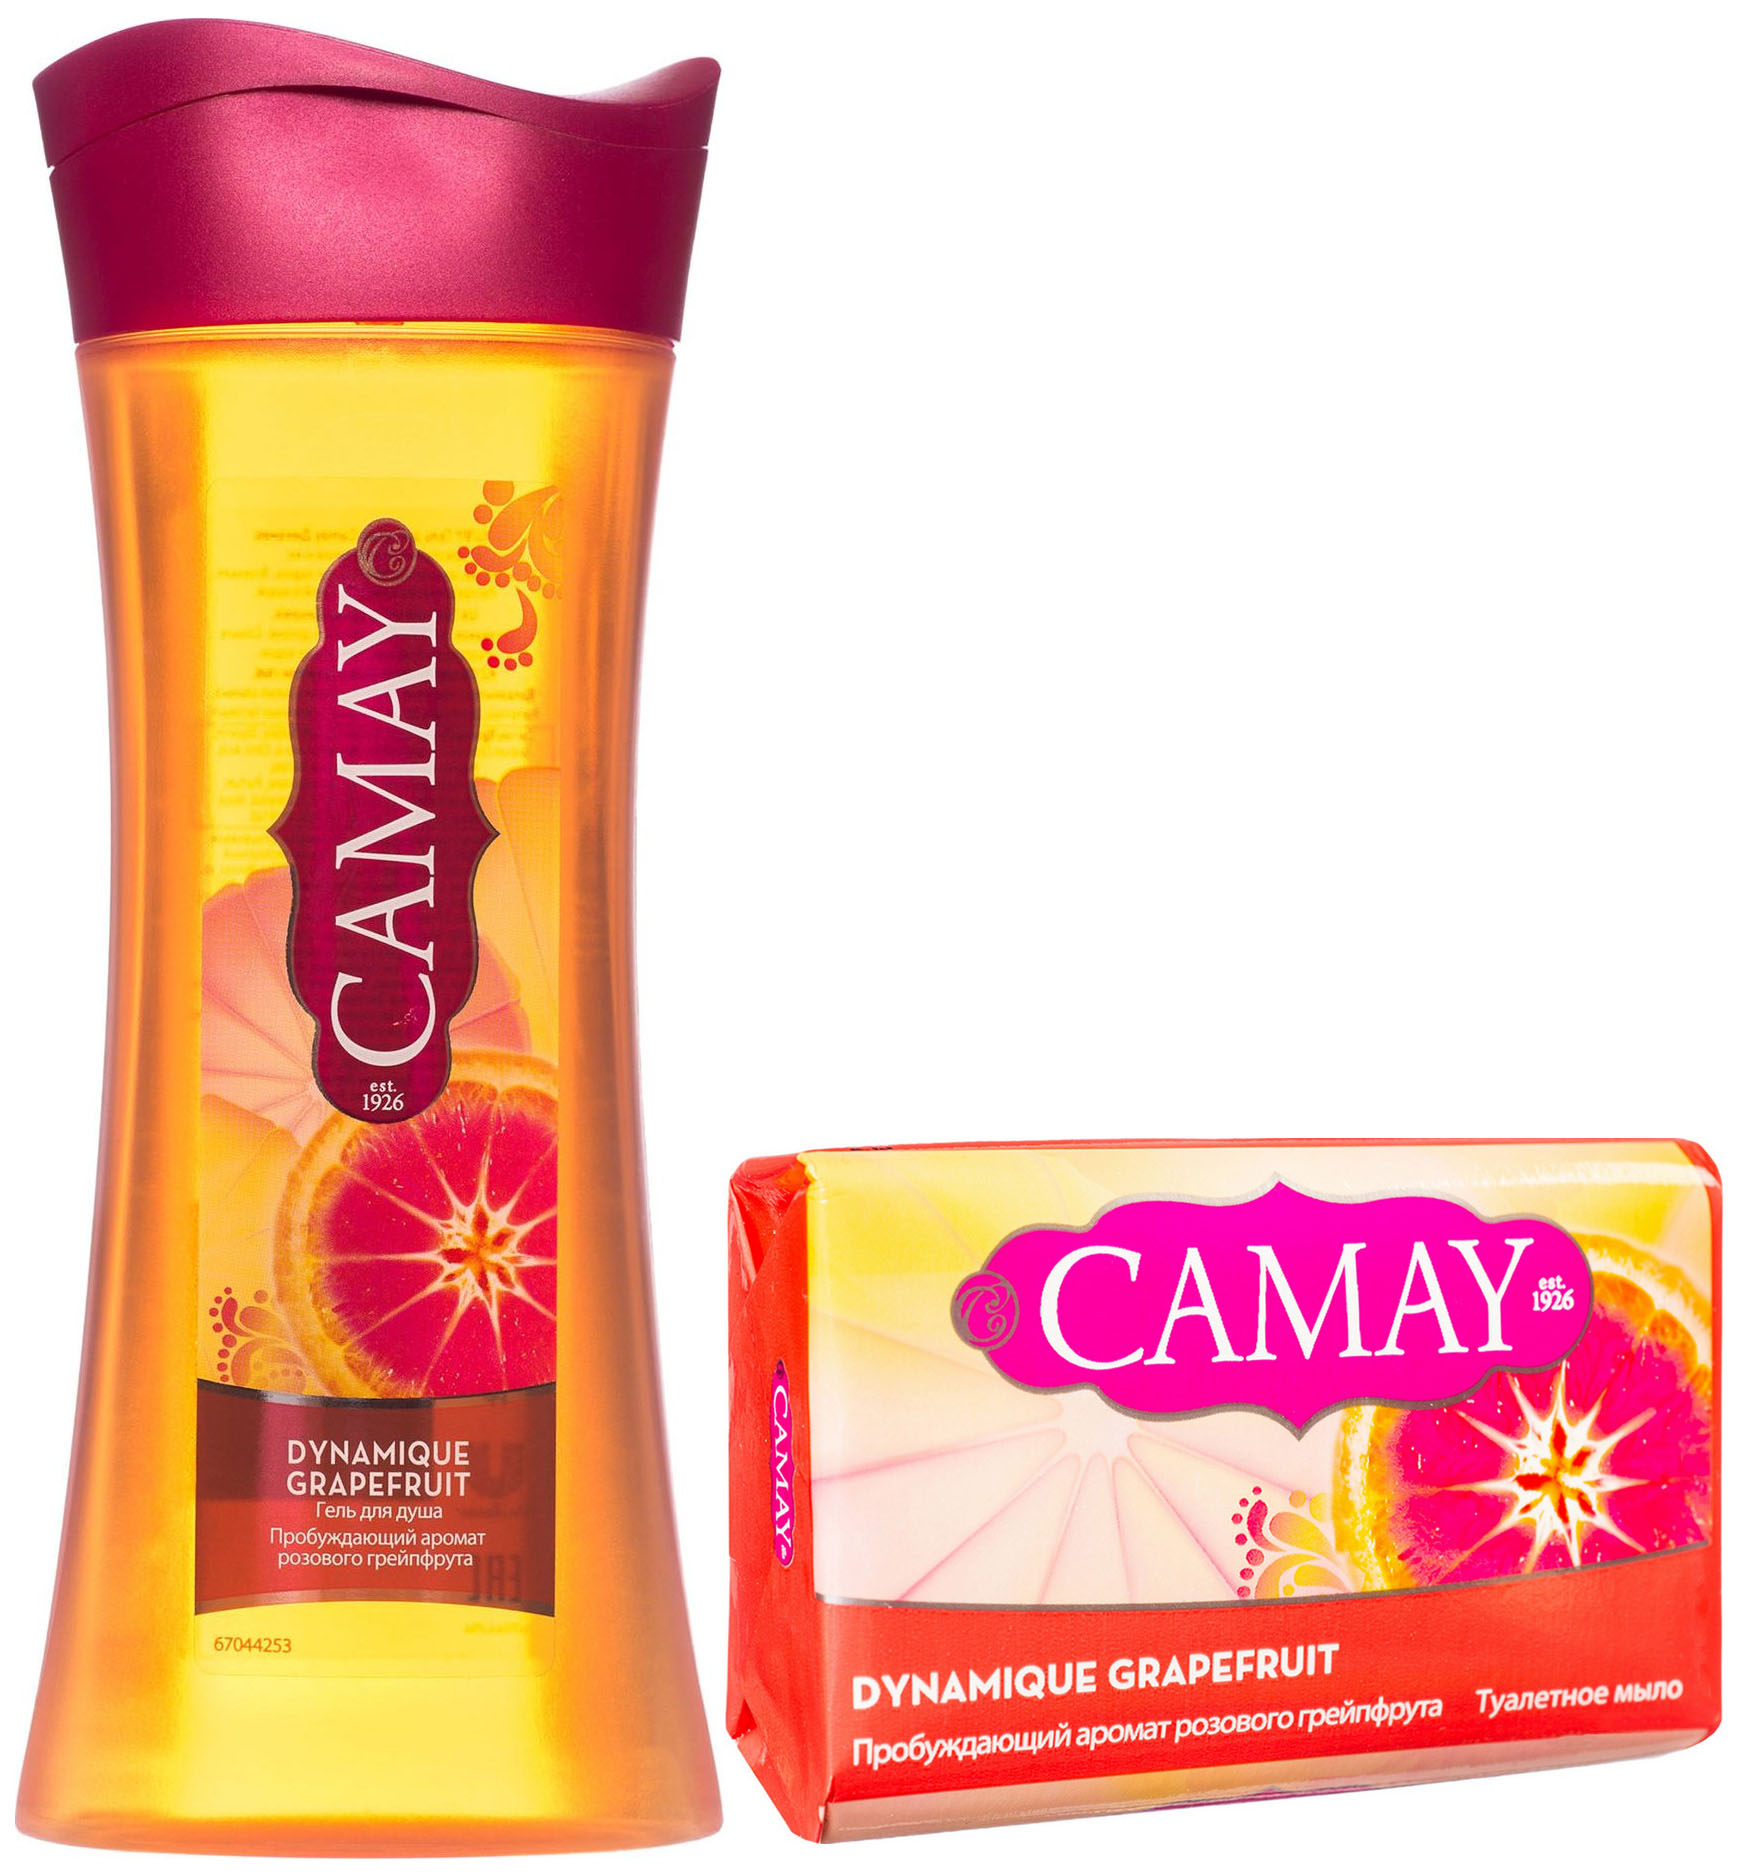 Гель для душа Camay Dynamique Grapefruit 250 мл + Мыло Camay Dynamique Grapefruit 85 г мыло camay романтик 85г х 6шт